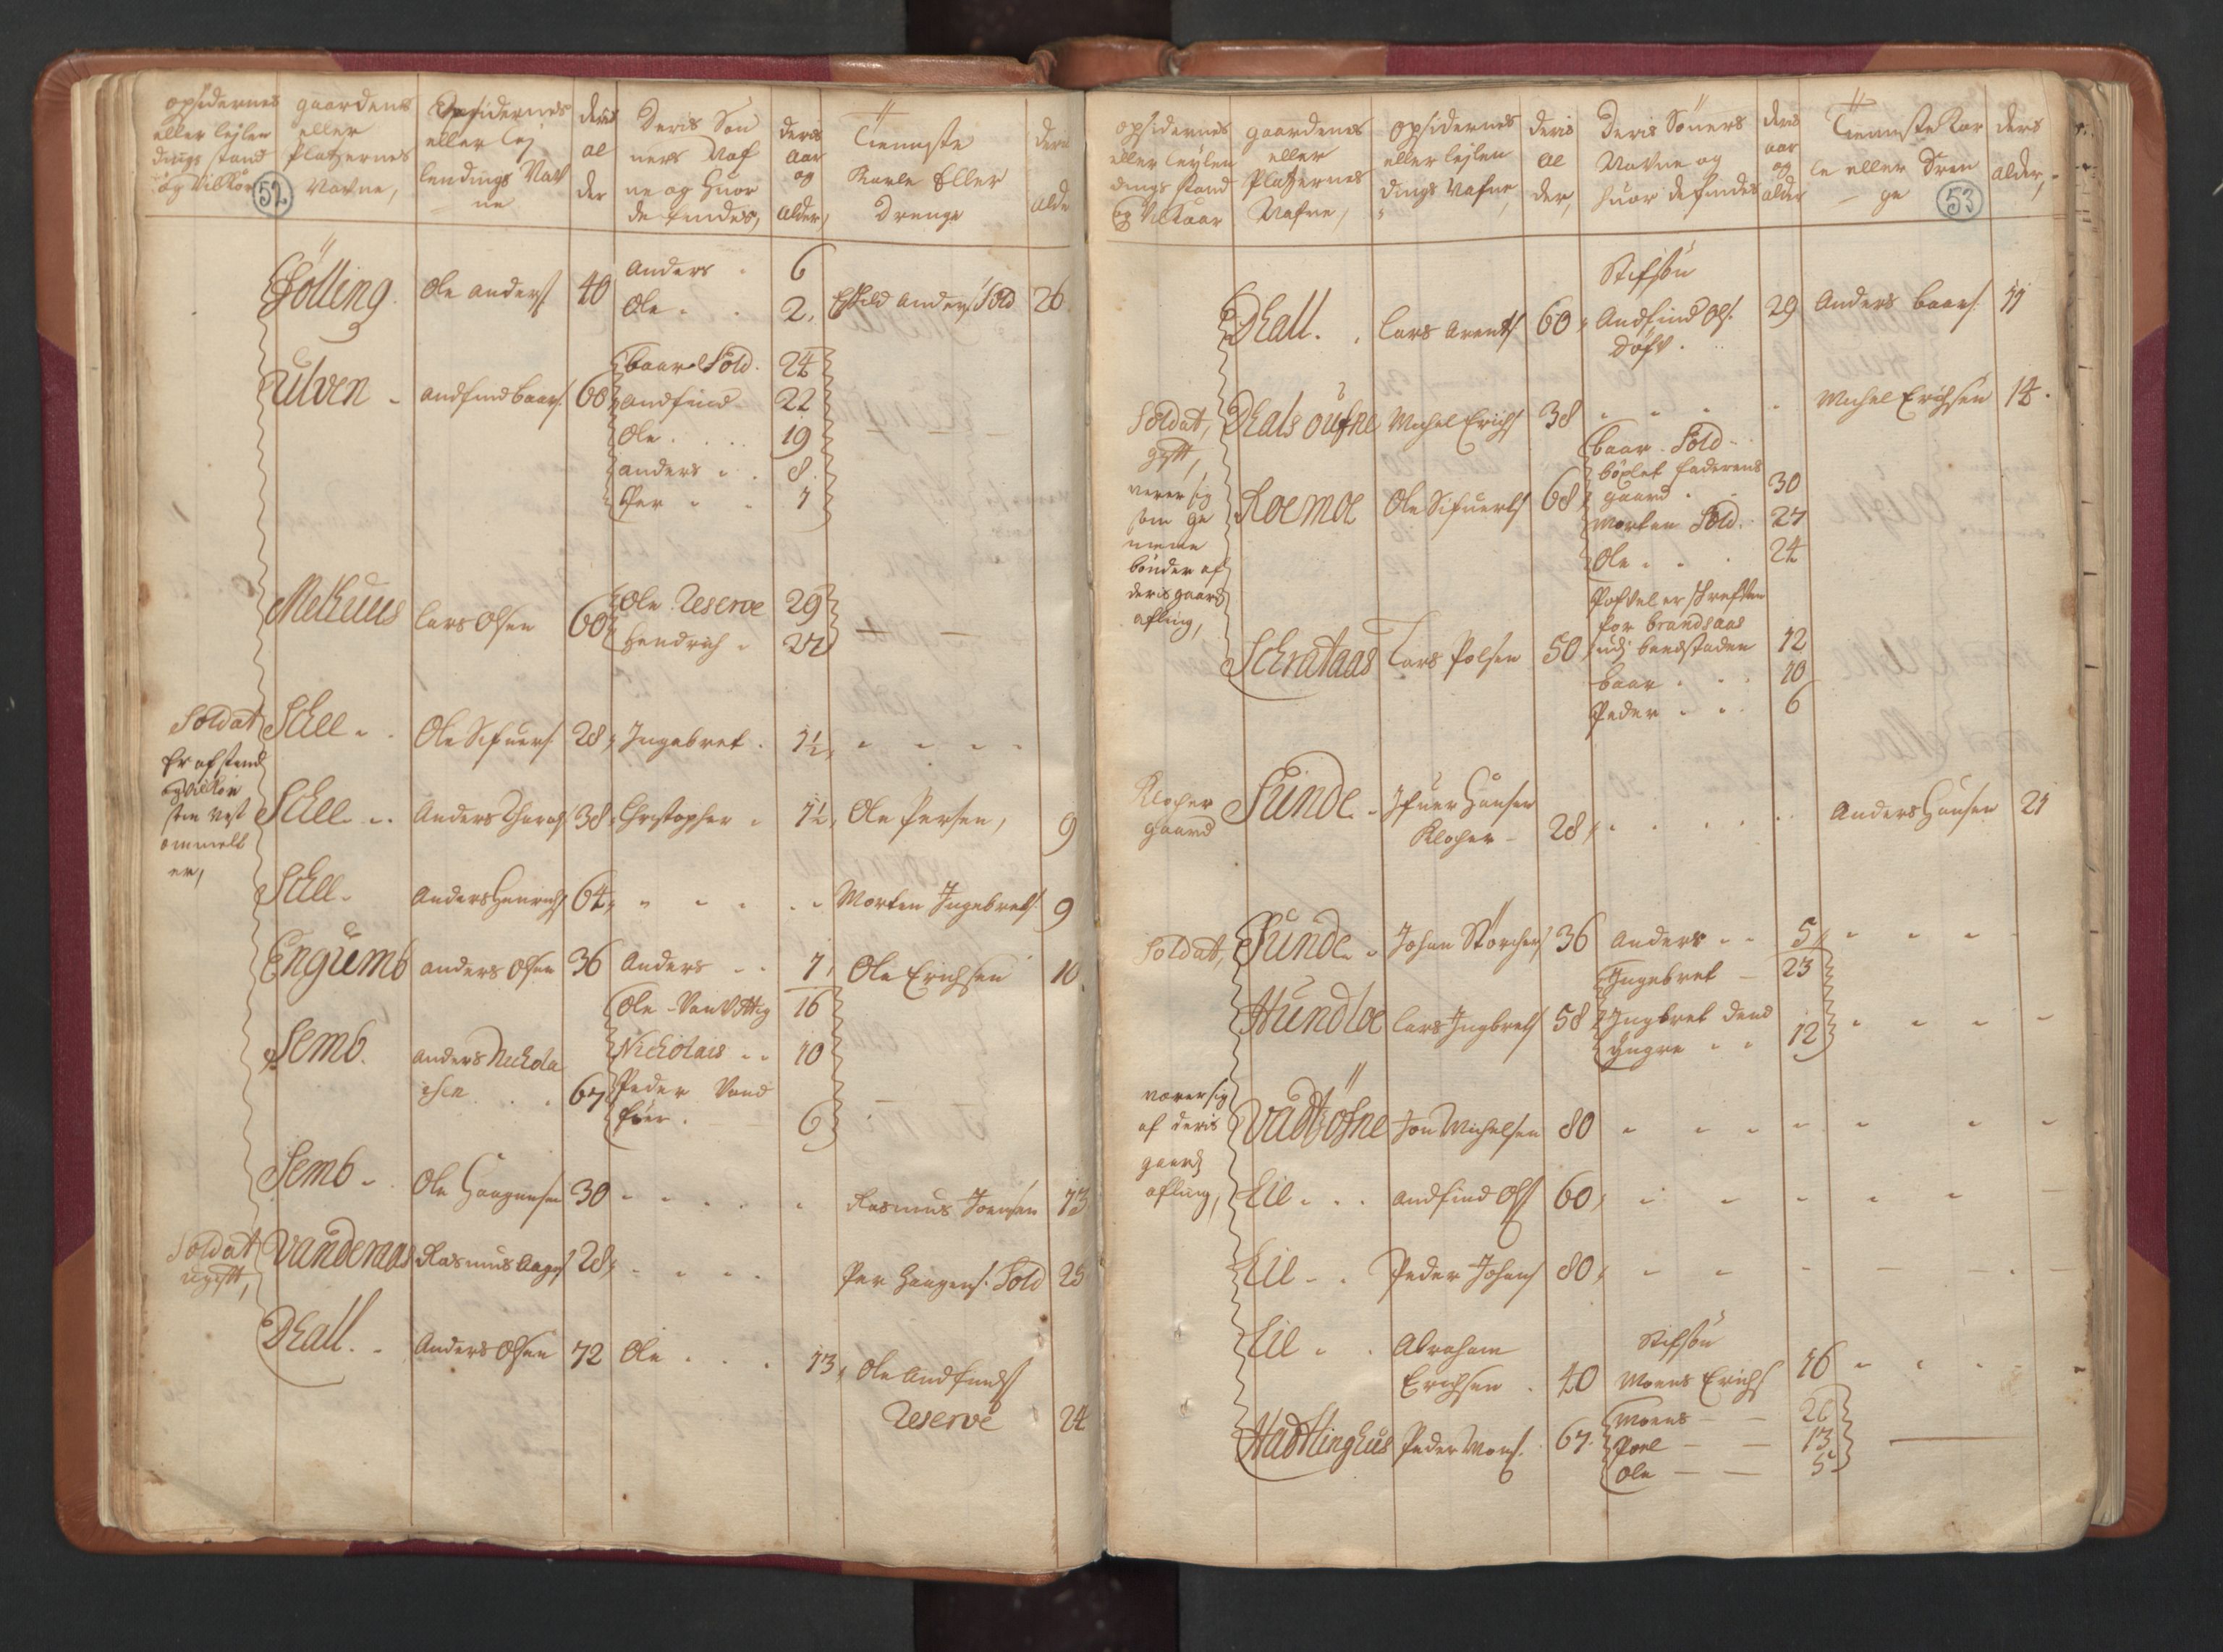 RA, Census (manntall) 1701, no. 15: Inderøy fogderi and Namdal fogderi, 1701, p. 52-53